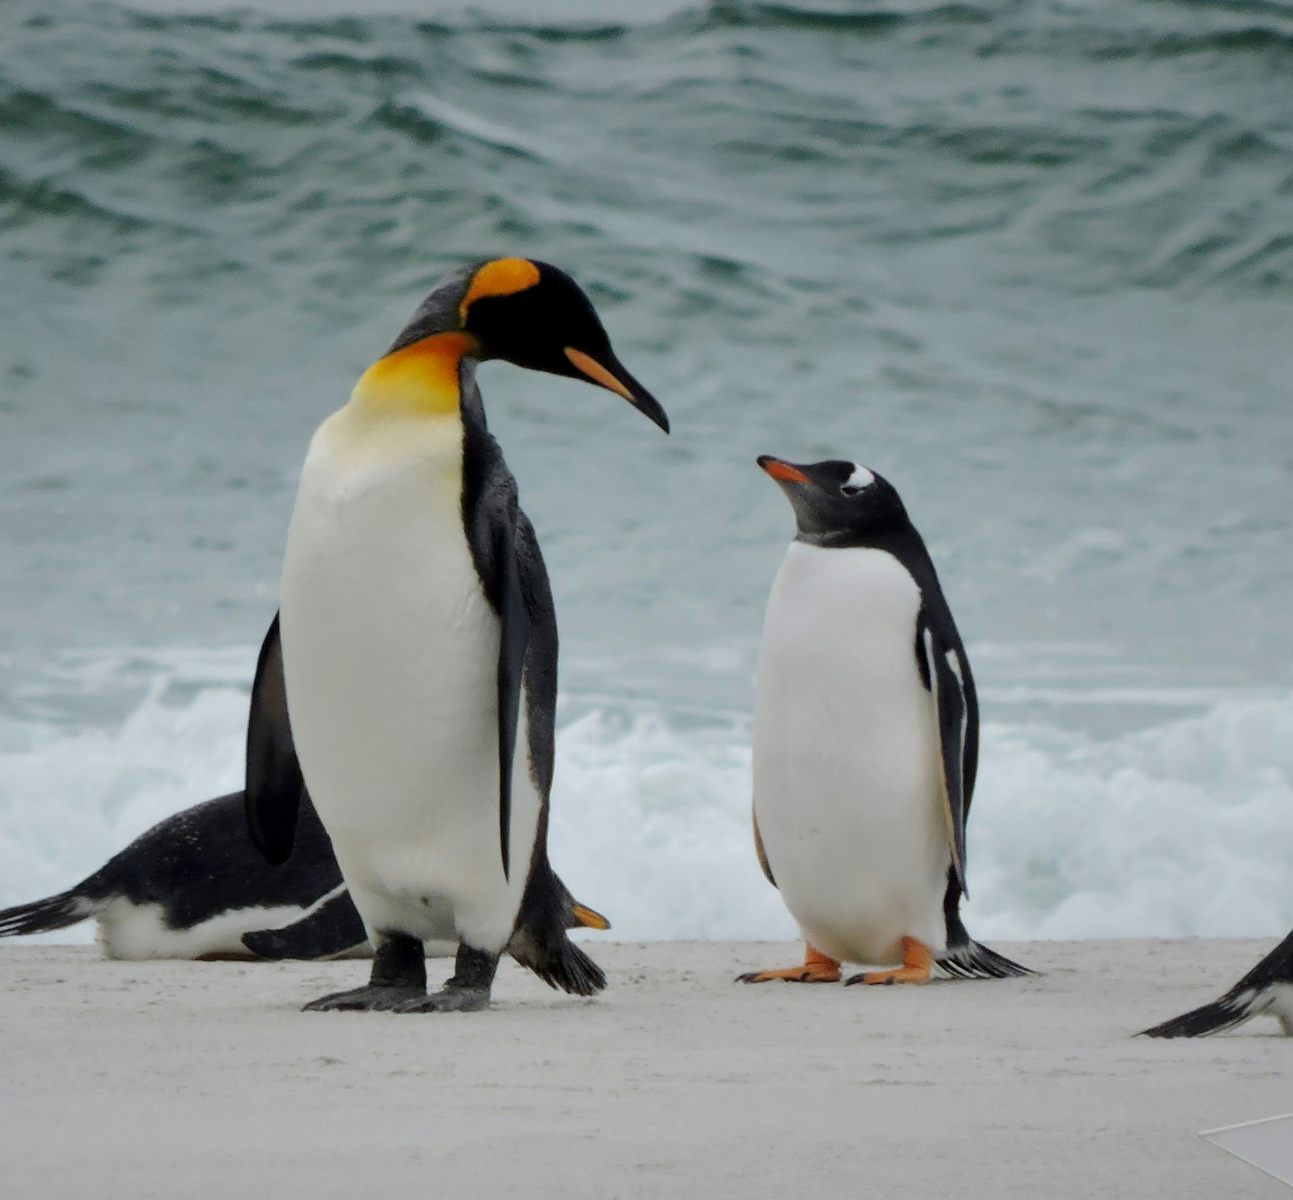 Penguins having an altercation at Bluffs Cove, Falkland Islands.